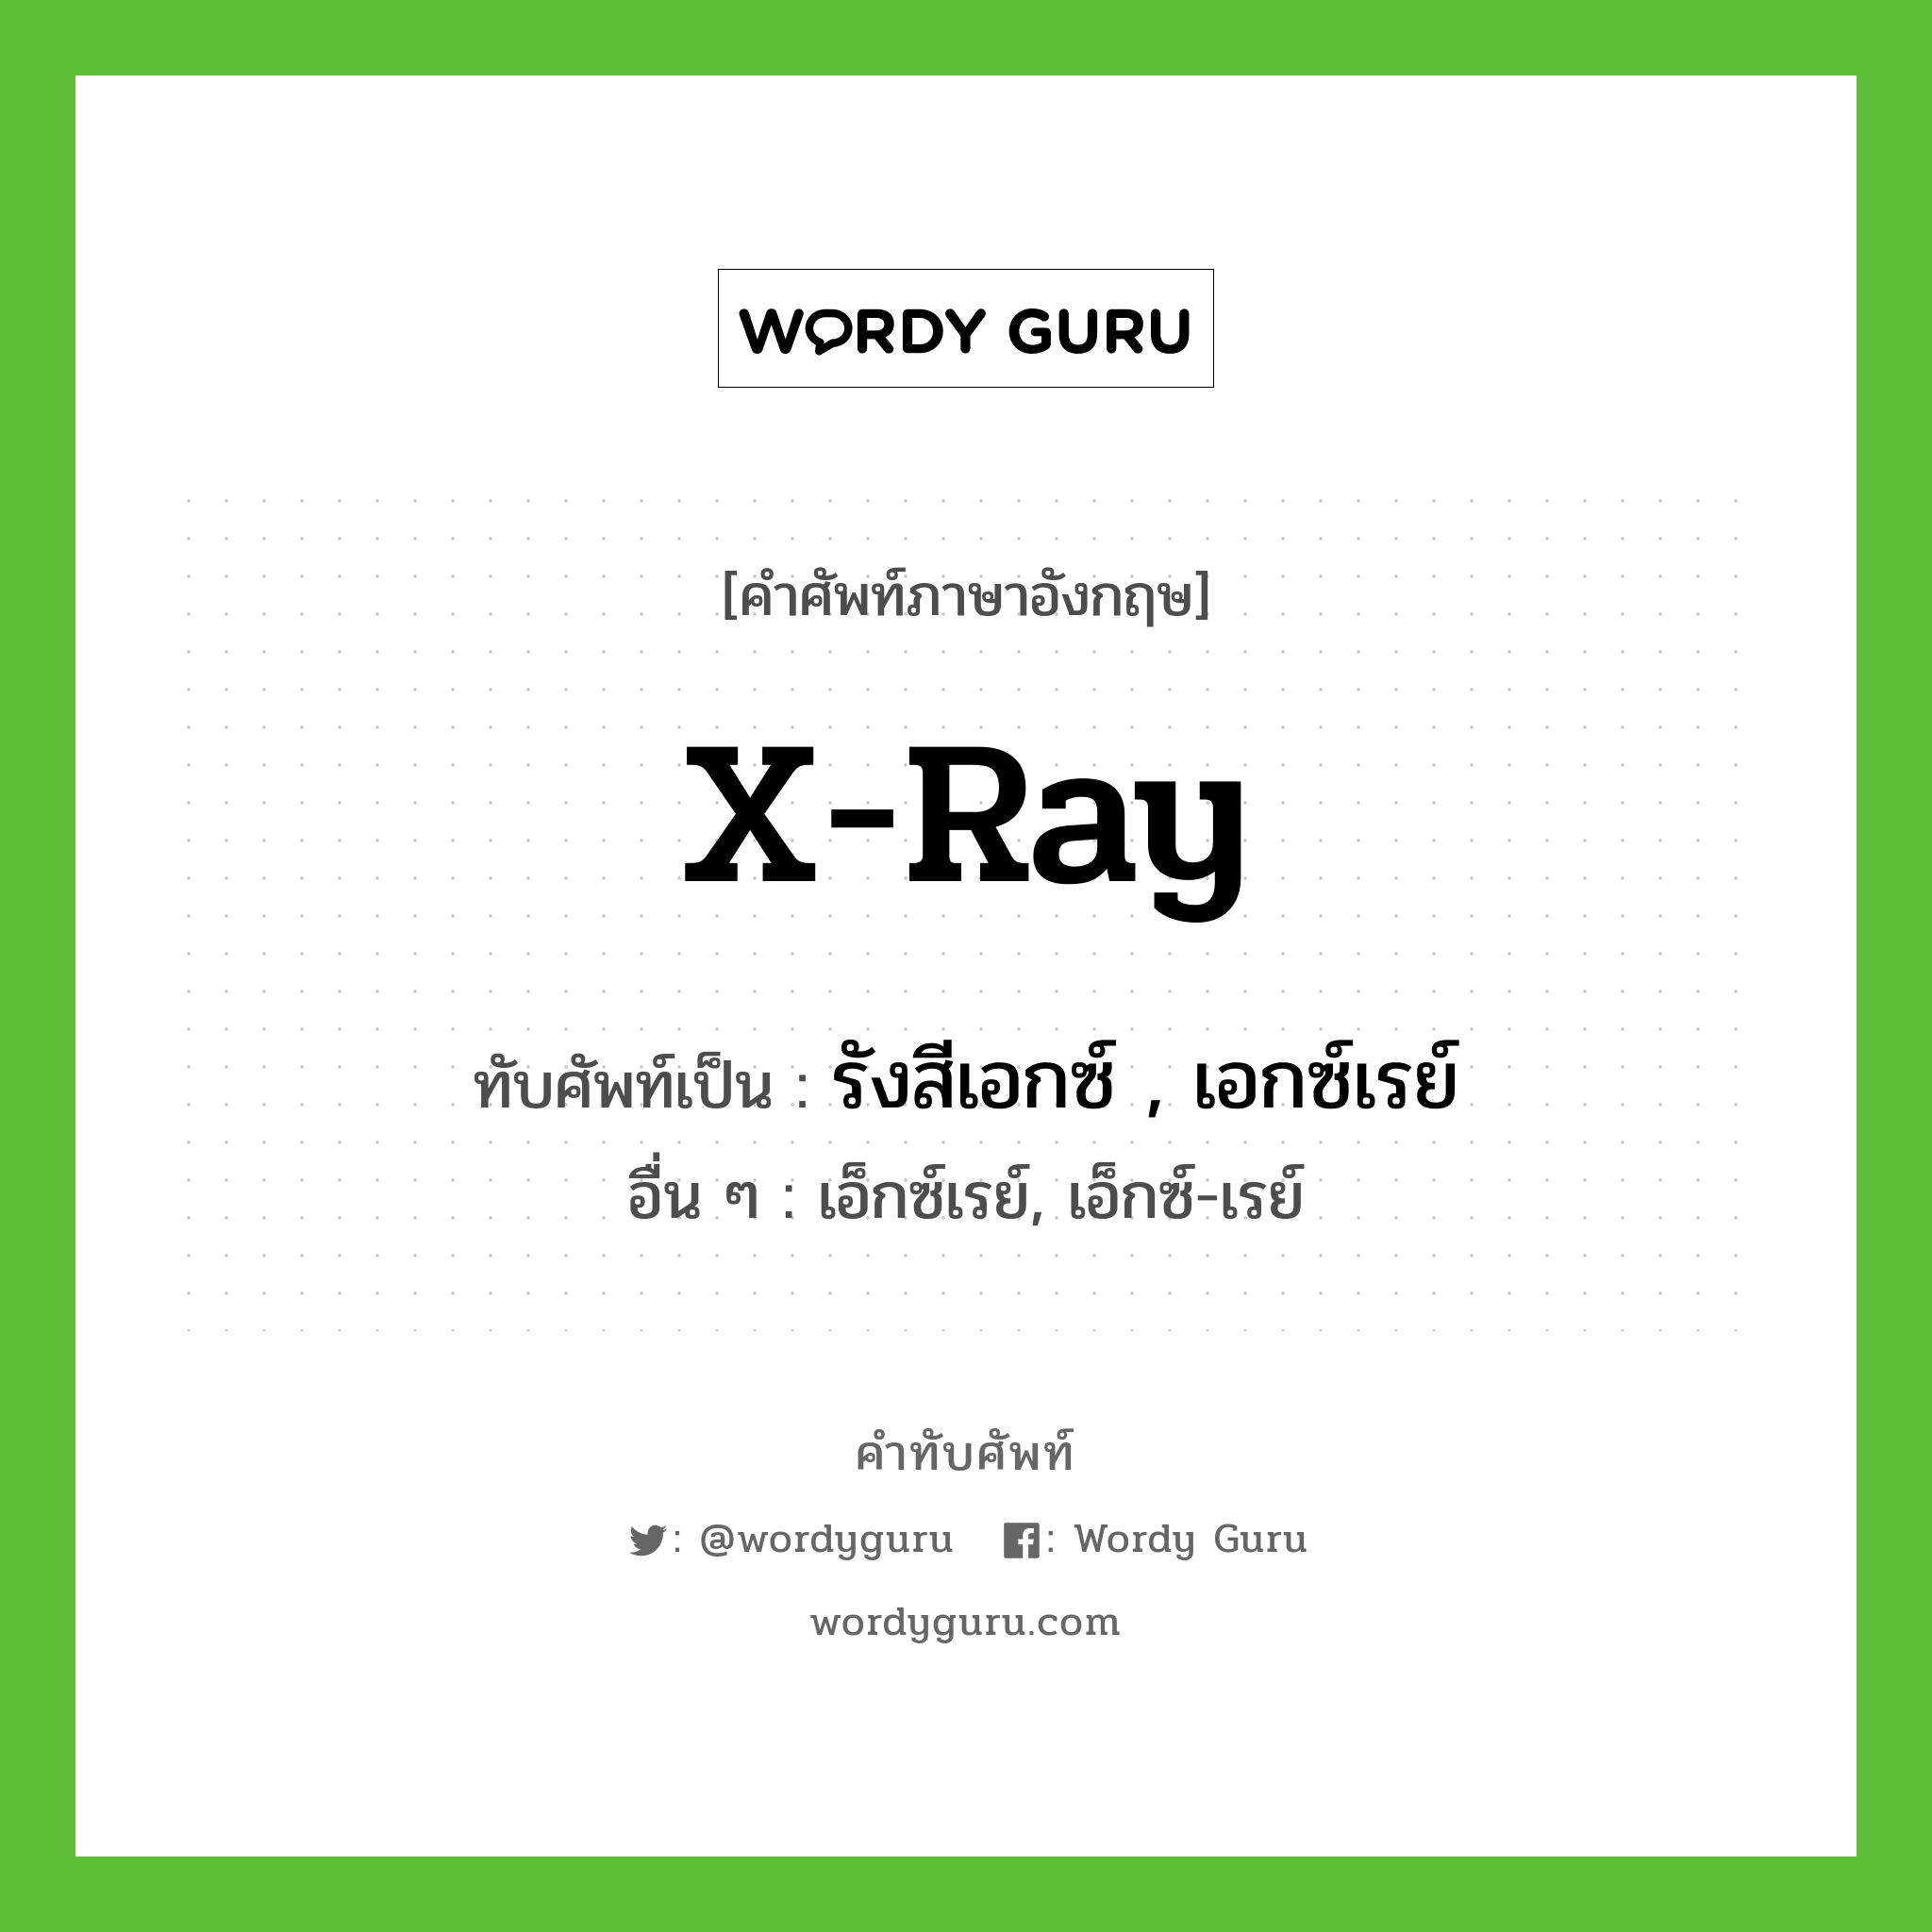 x-ray เขียนเป็นคำไทยว่าอะไร?, คำศัพท์ภาษาอังกฤษ x-ray ทับศัพท์เป็น รังสีเอกซ์ , เอกซ์เรย์ อื่น ๆ เอ็กซ์เรย์, เอ็กซ์-เรย์